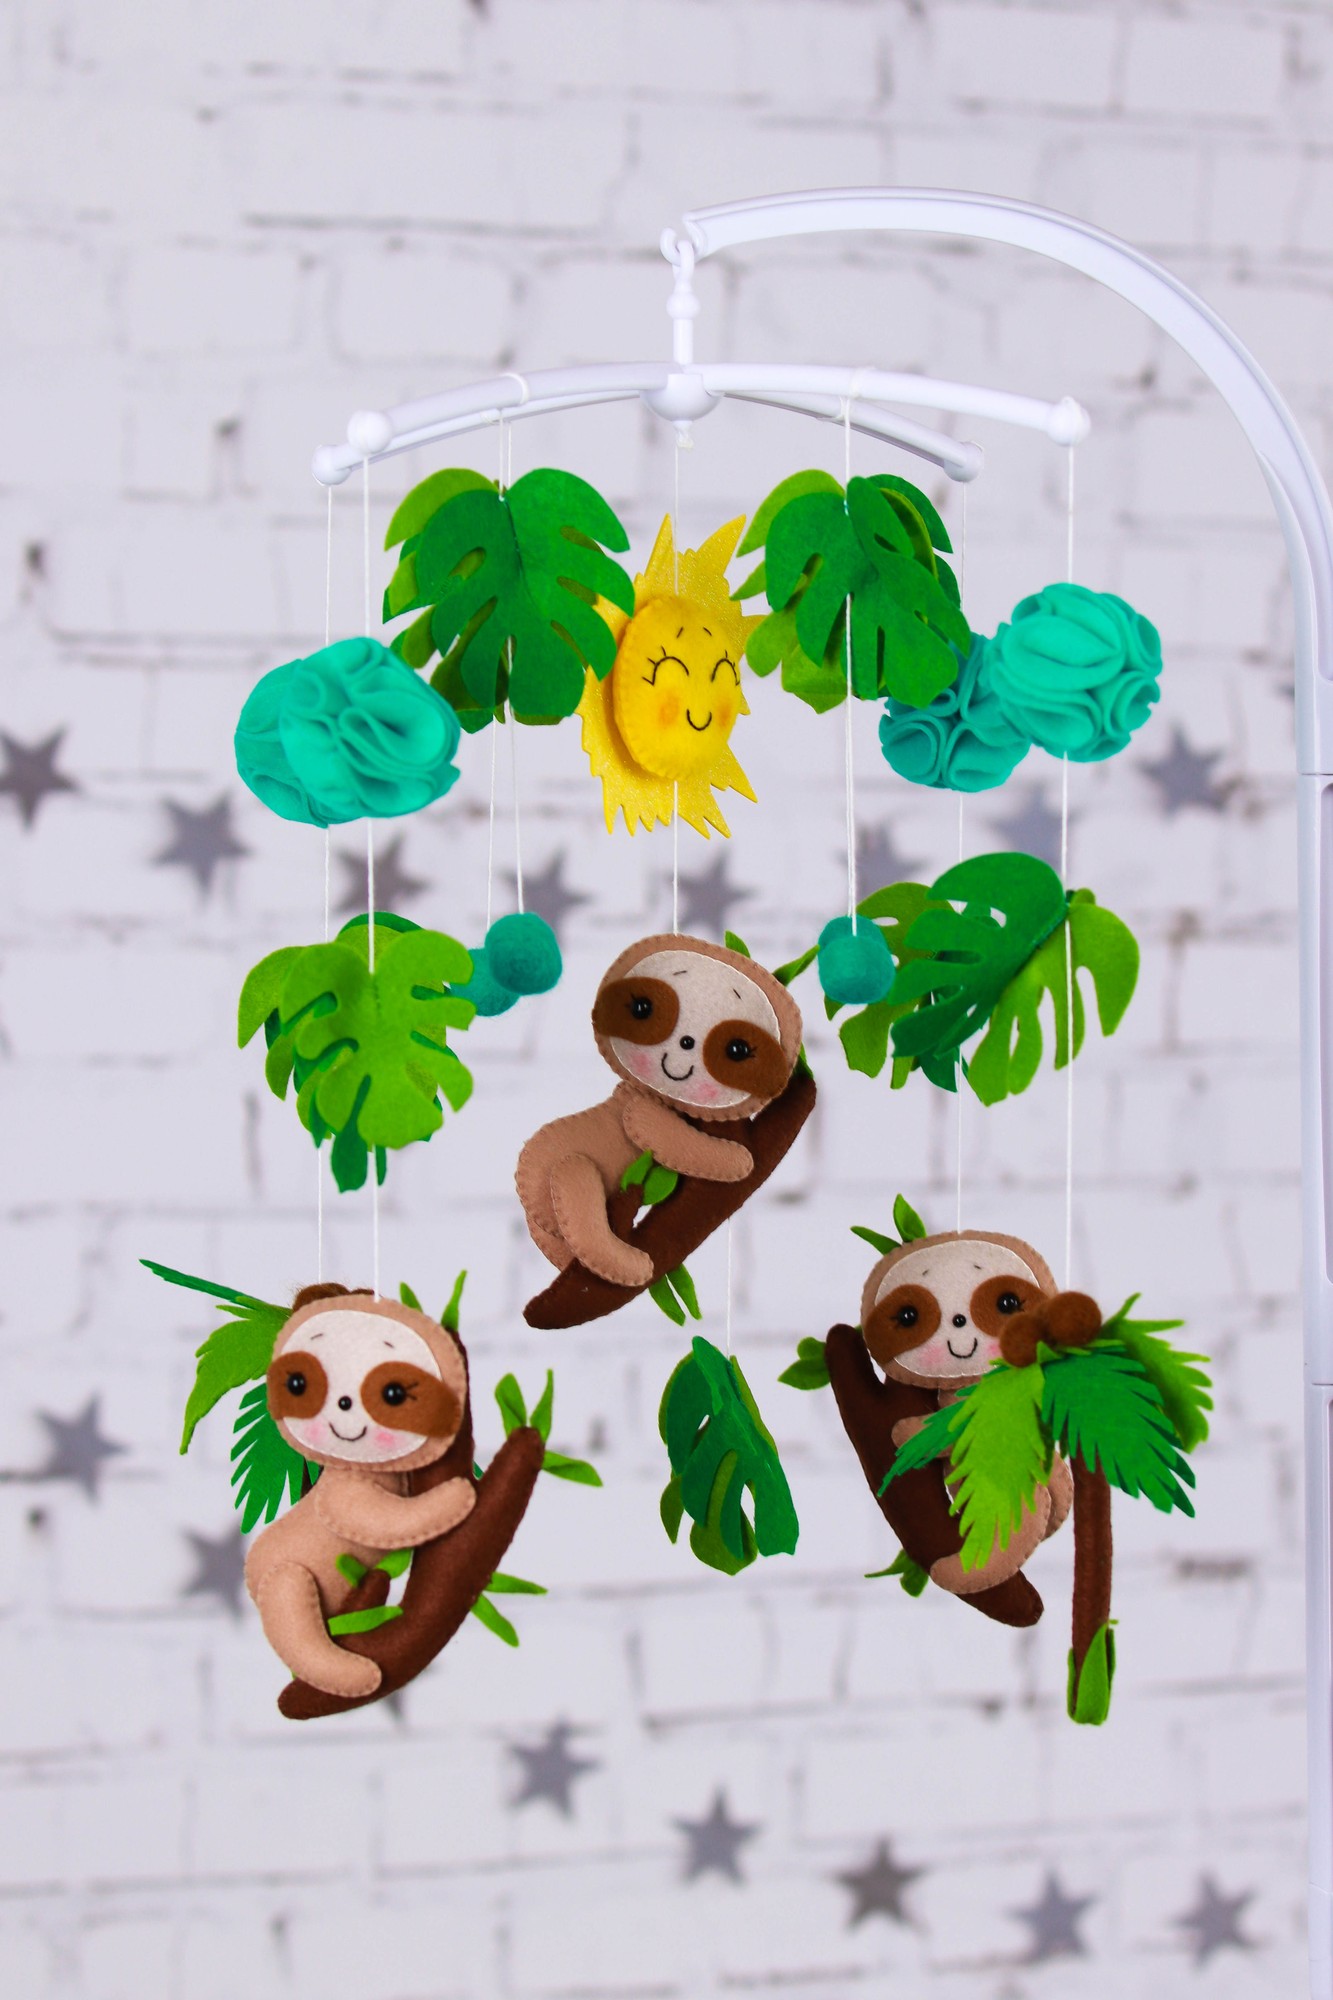 Baby mobile "Jungle sloths"